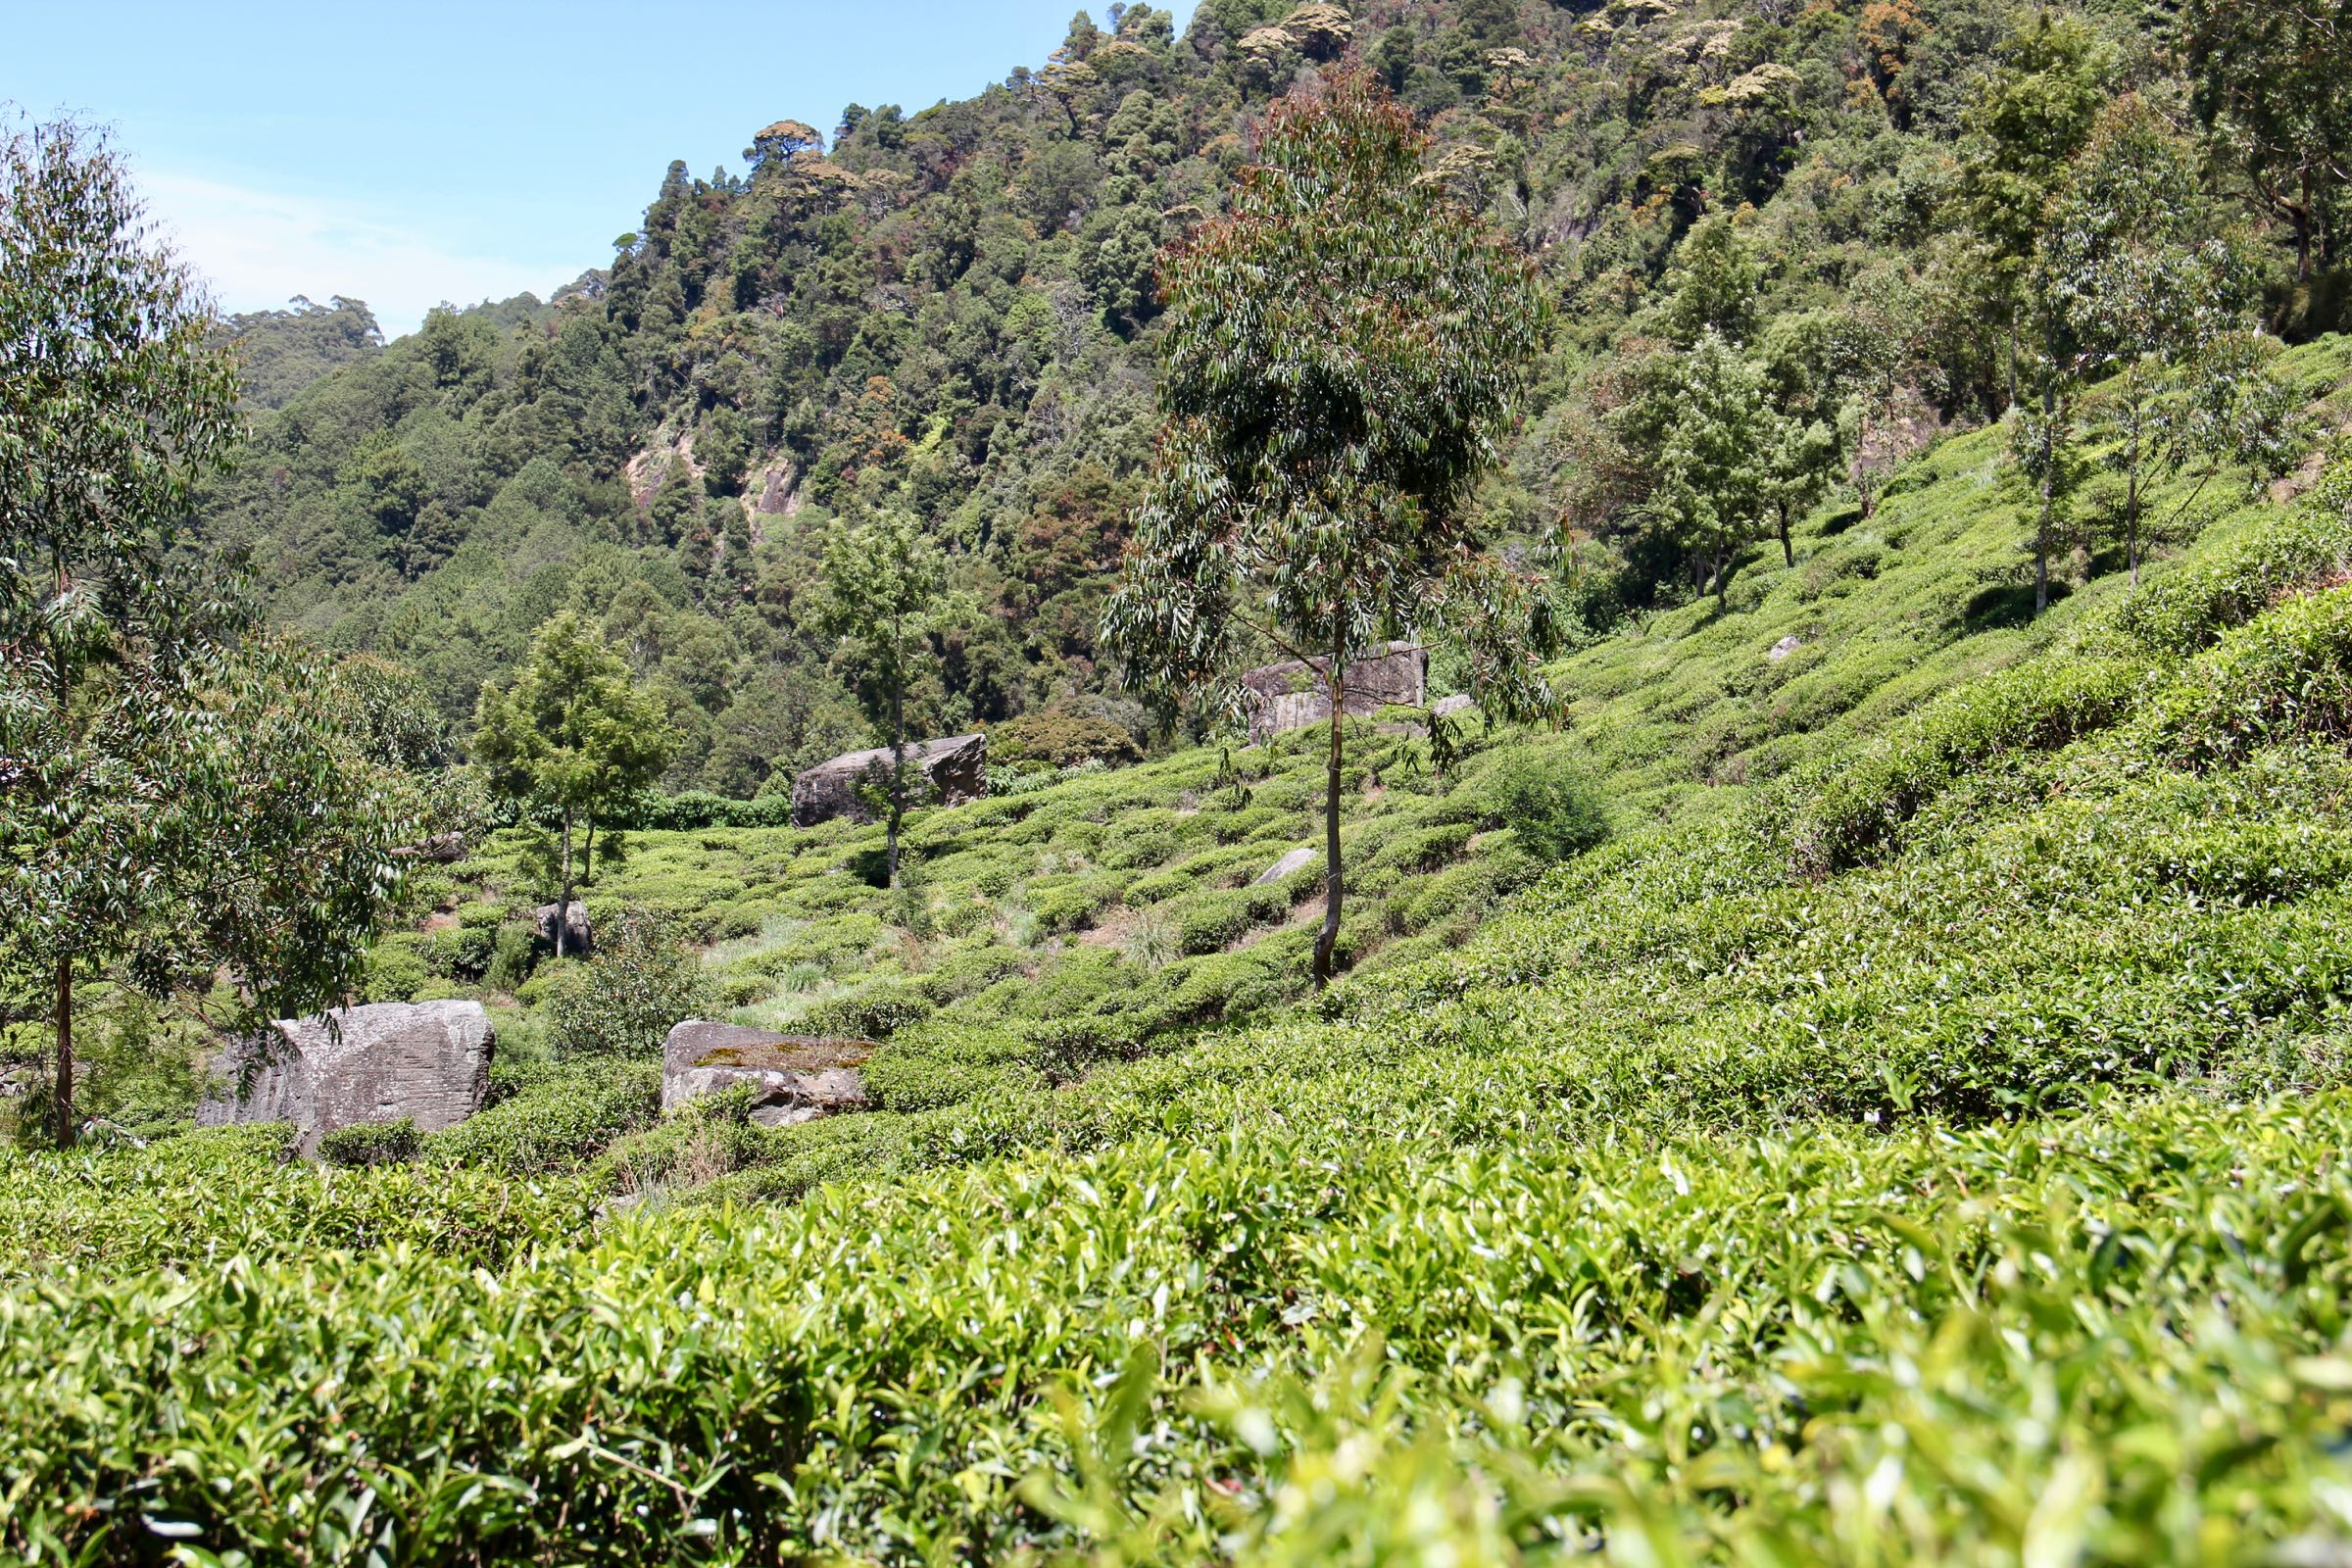 Teeplantage bei Nuwara Eliya, Sri Lanka